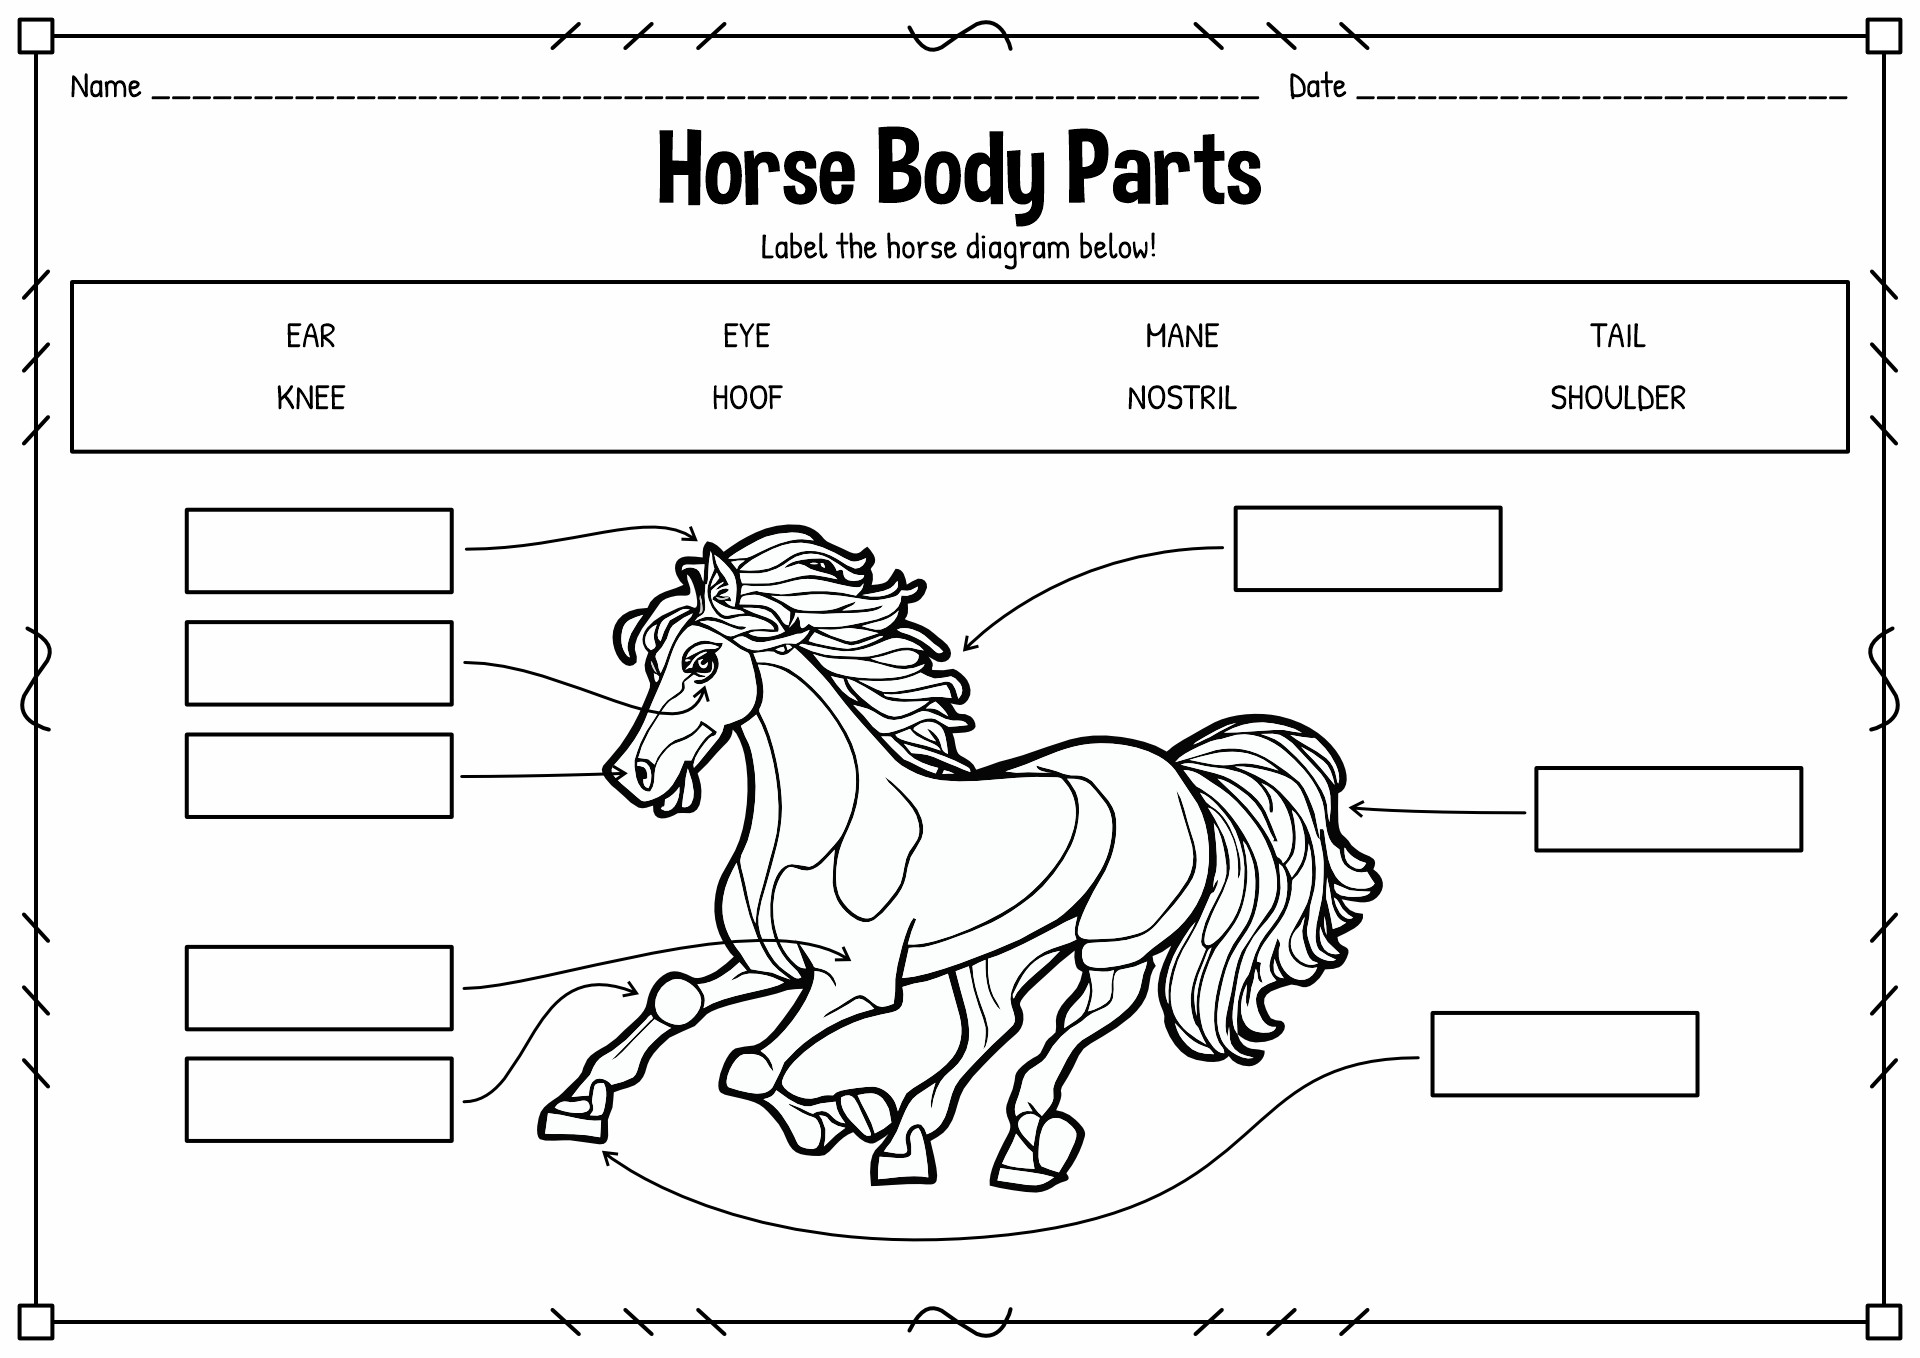 Horse Parts Worksheet Printable Image